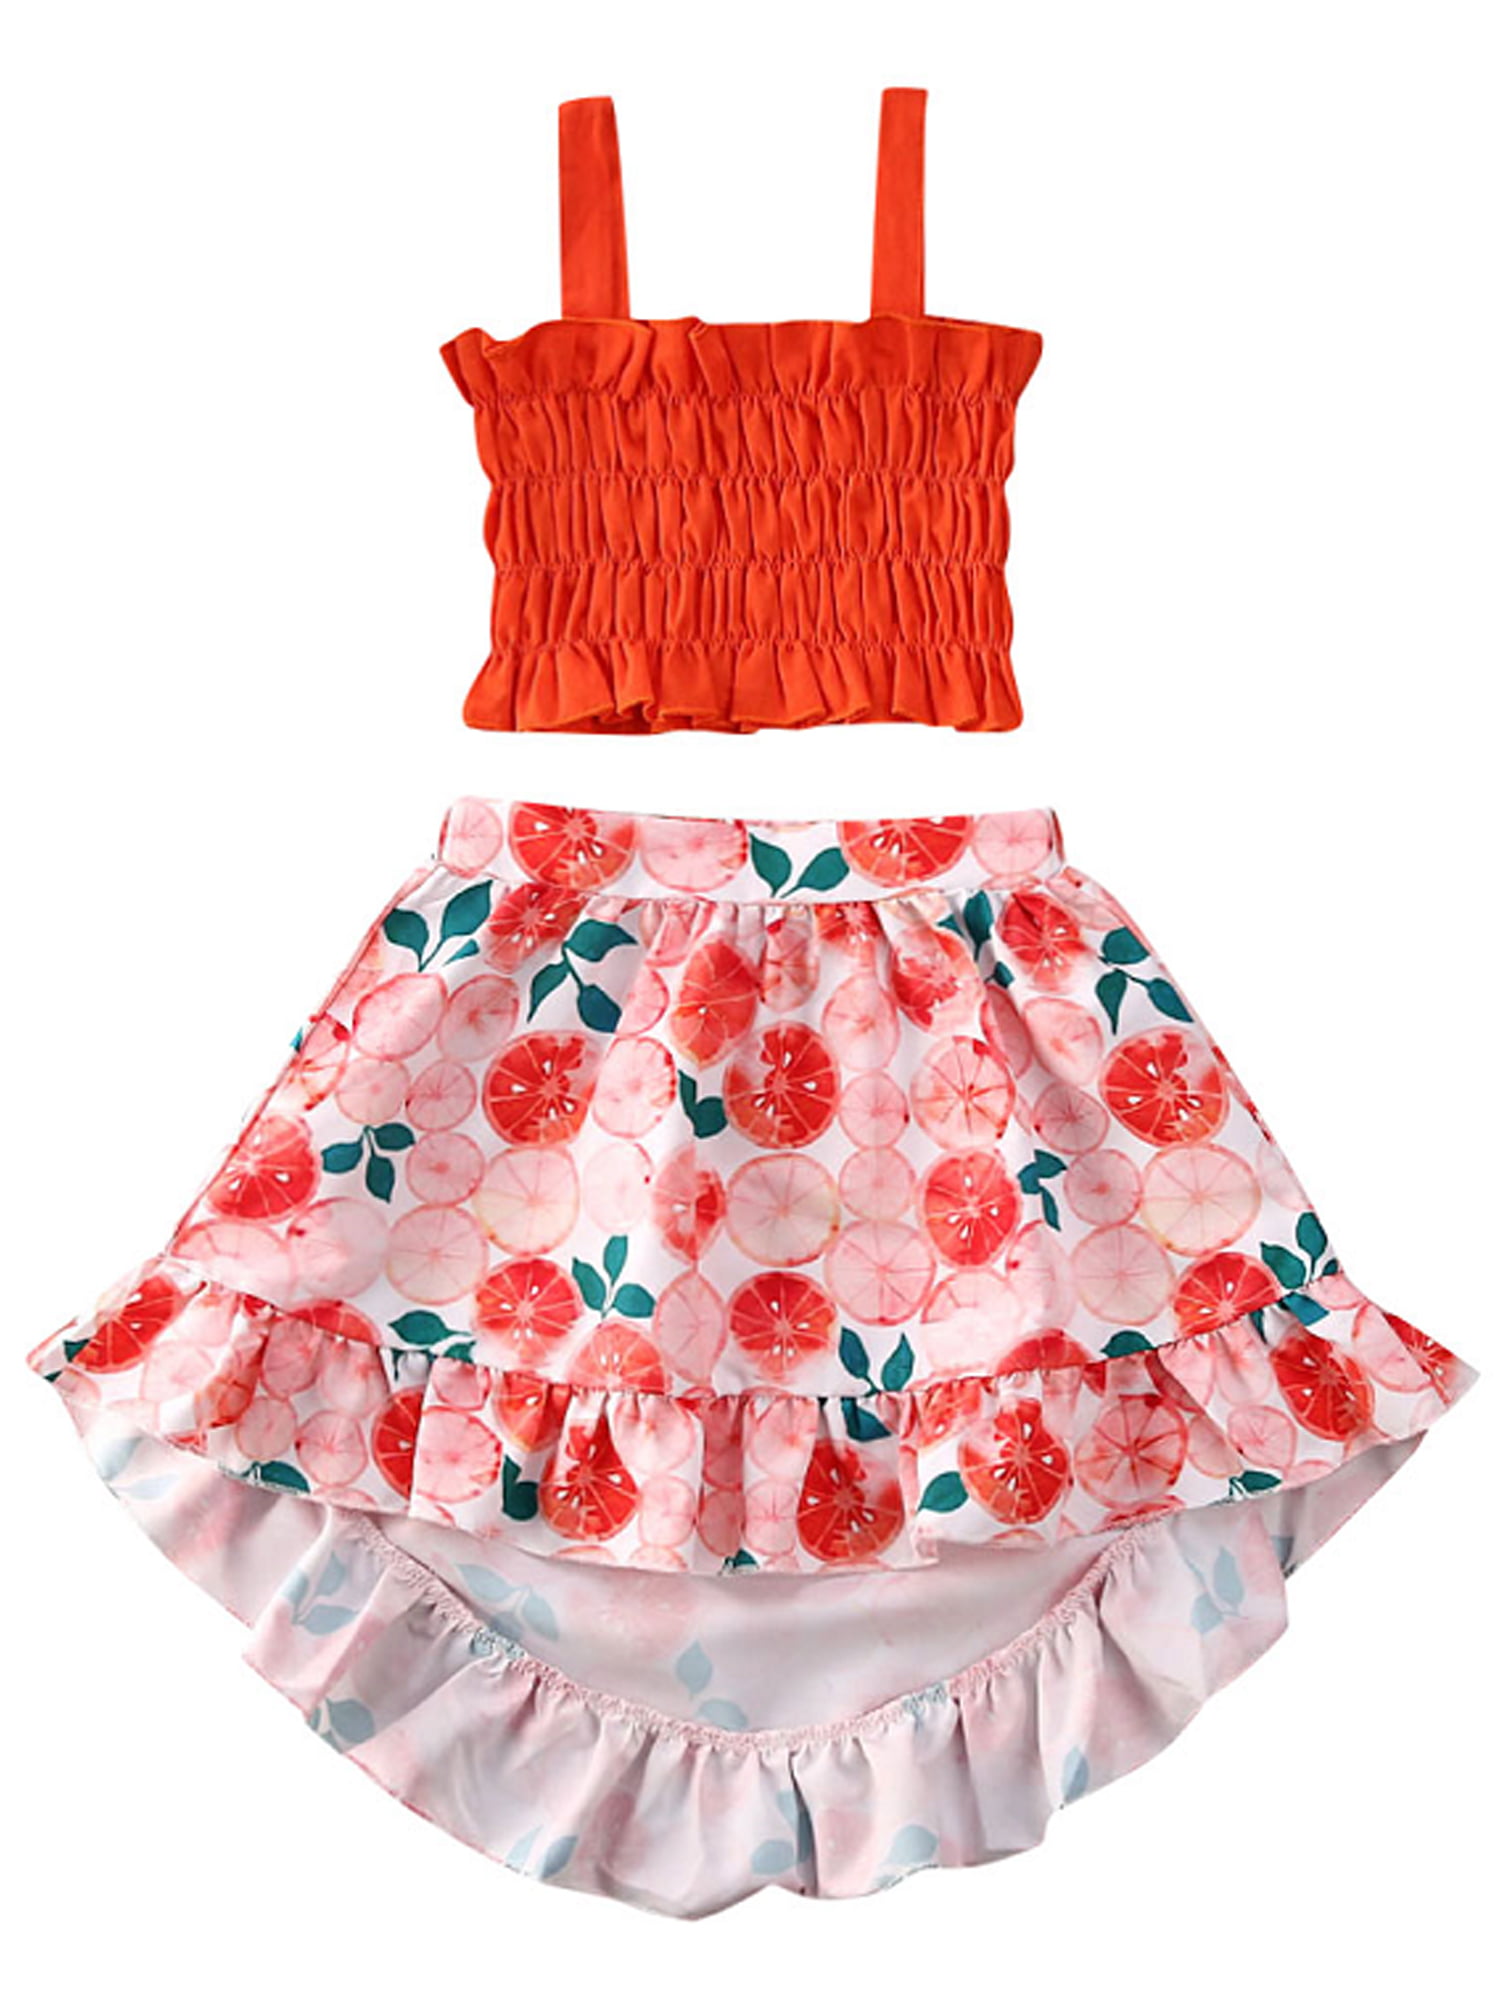 crop top dress for baby girl